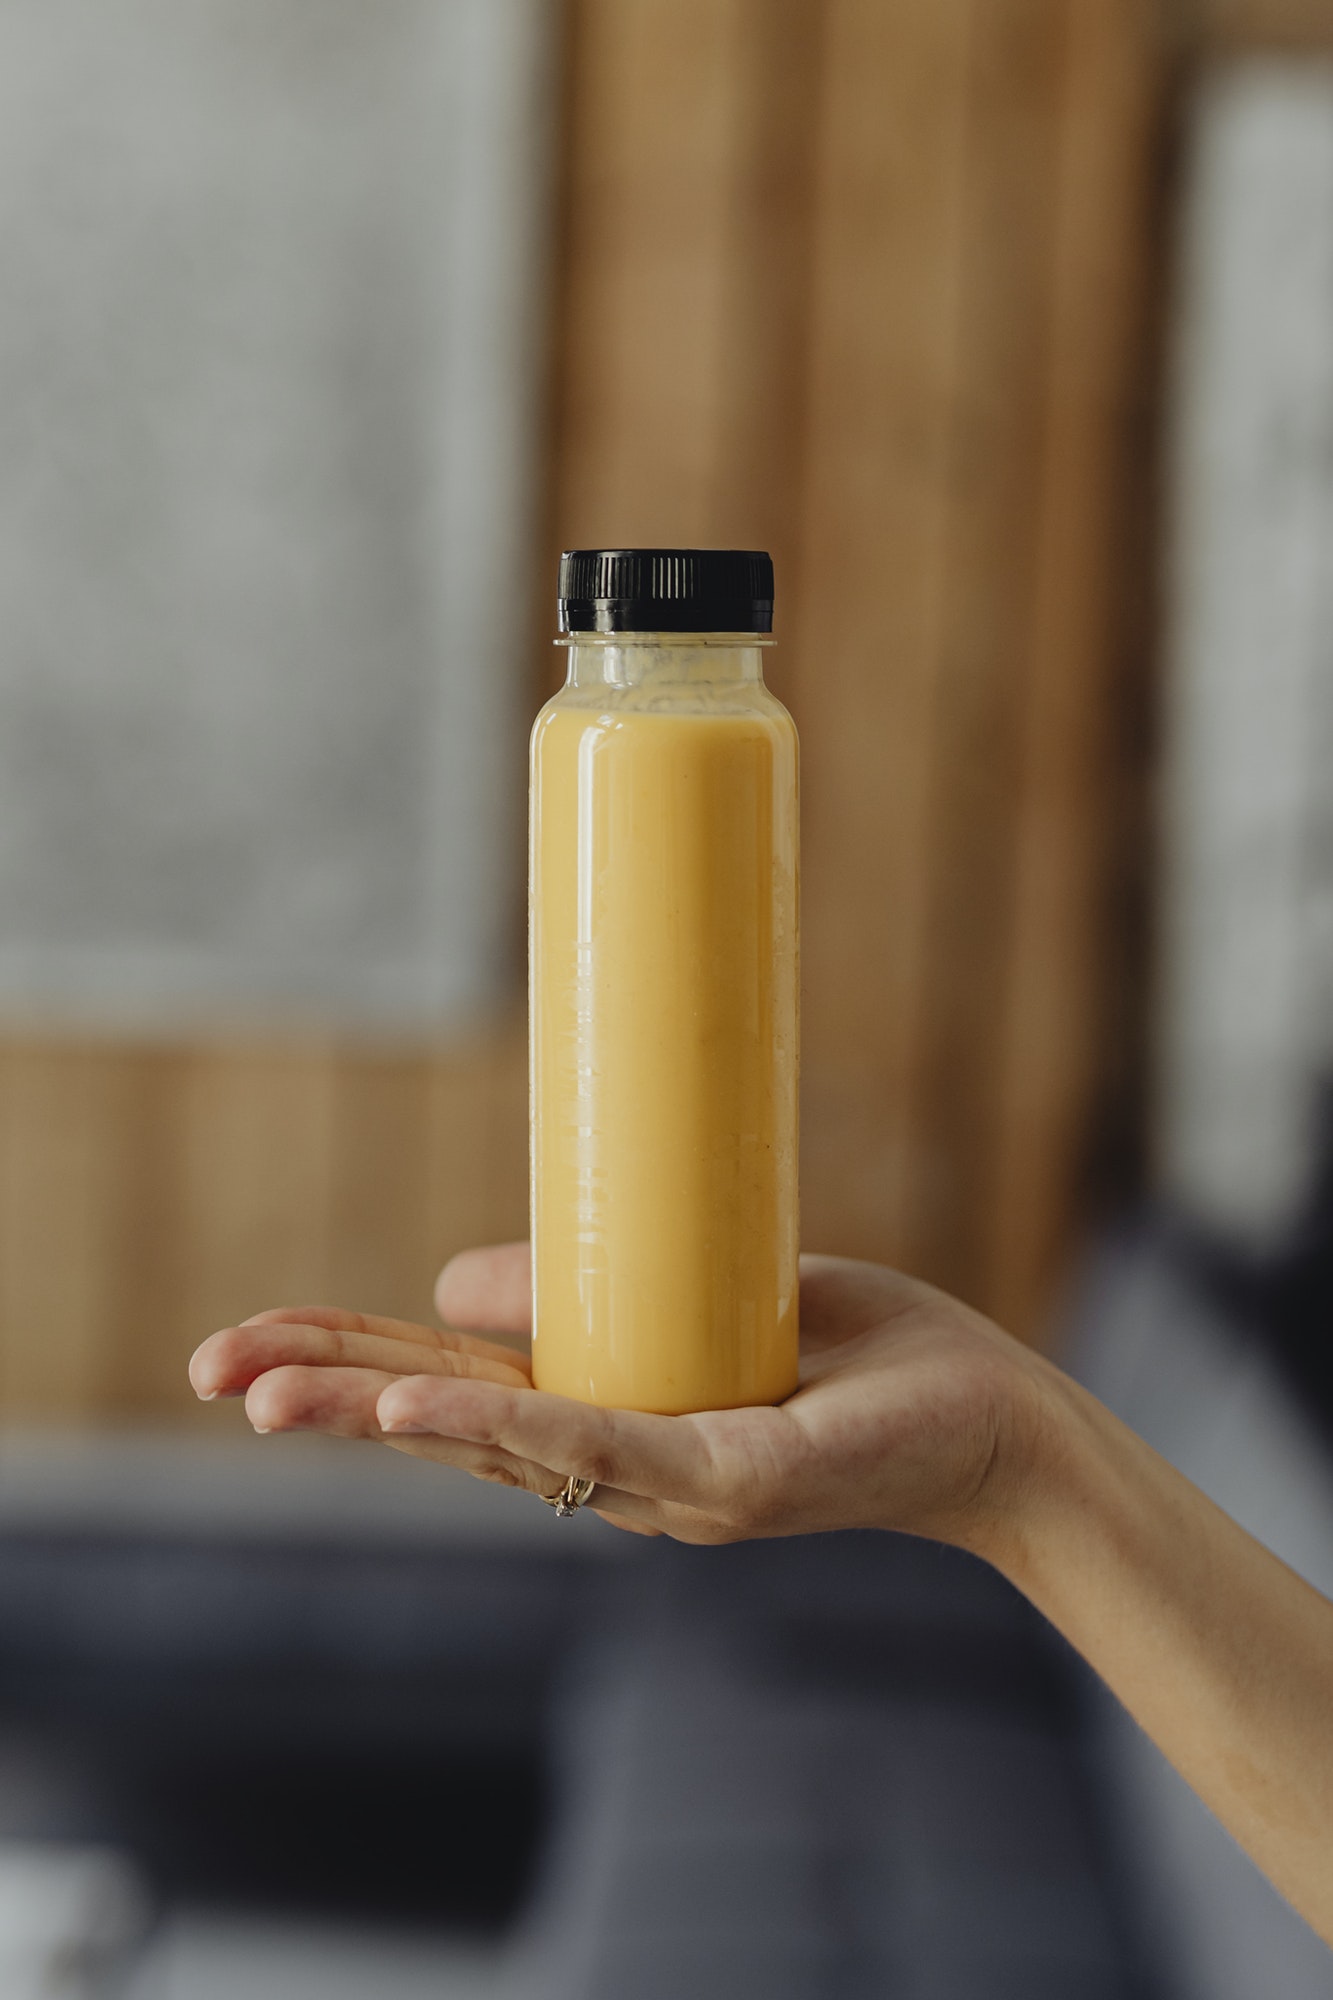 Detox cold-pressed juice in a bottle